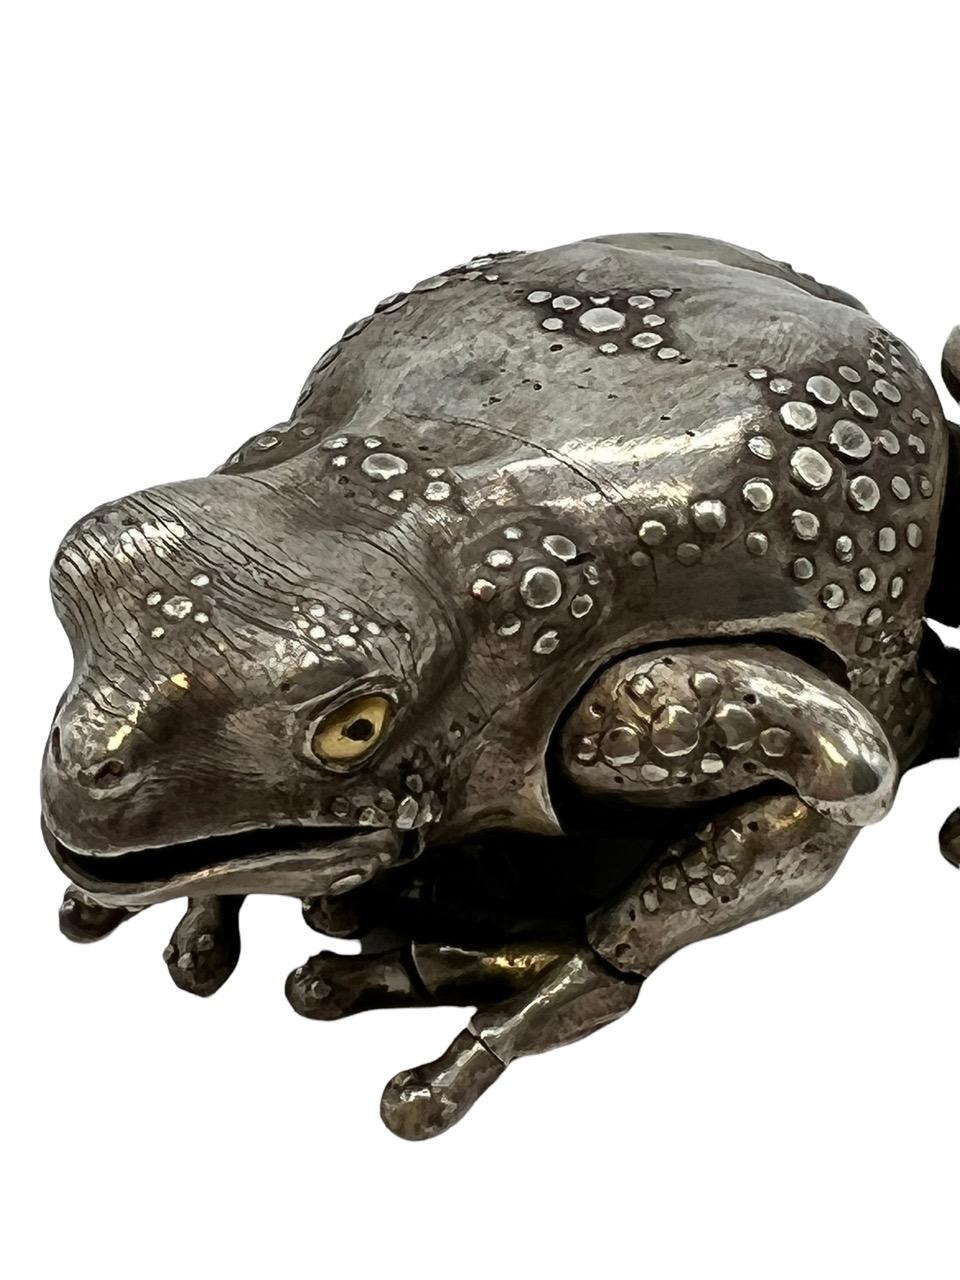 Oleg Konstantinov Fully Articulated Frog Made of Sterling Silver 8